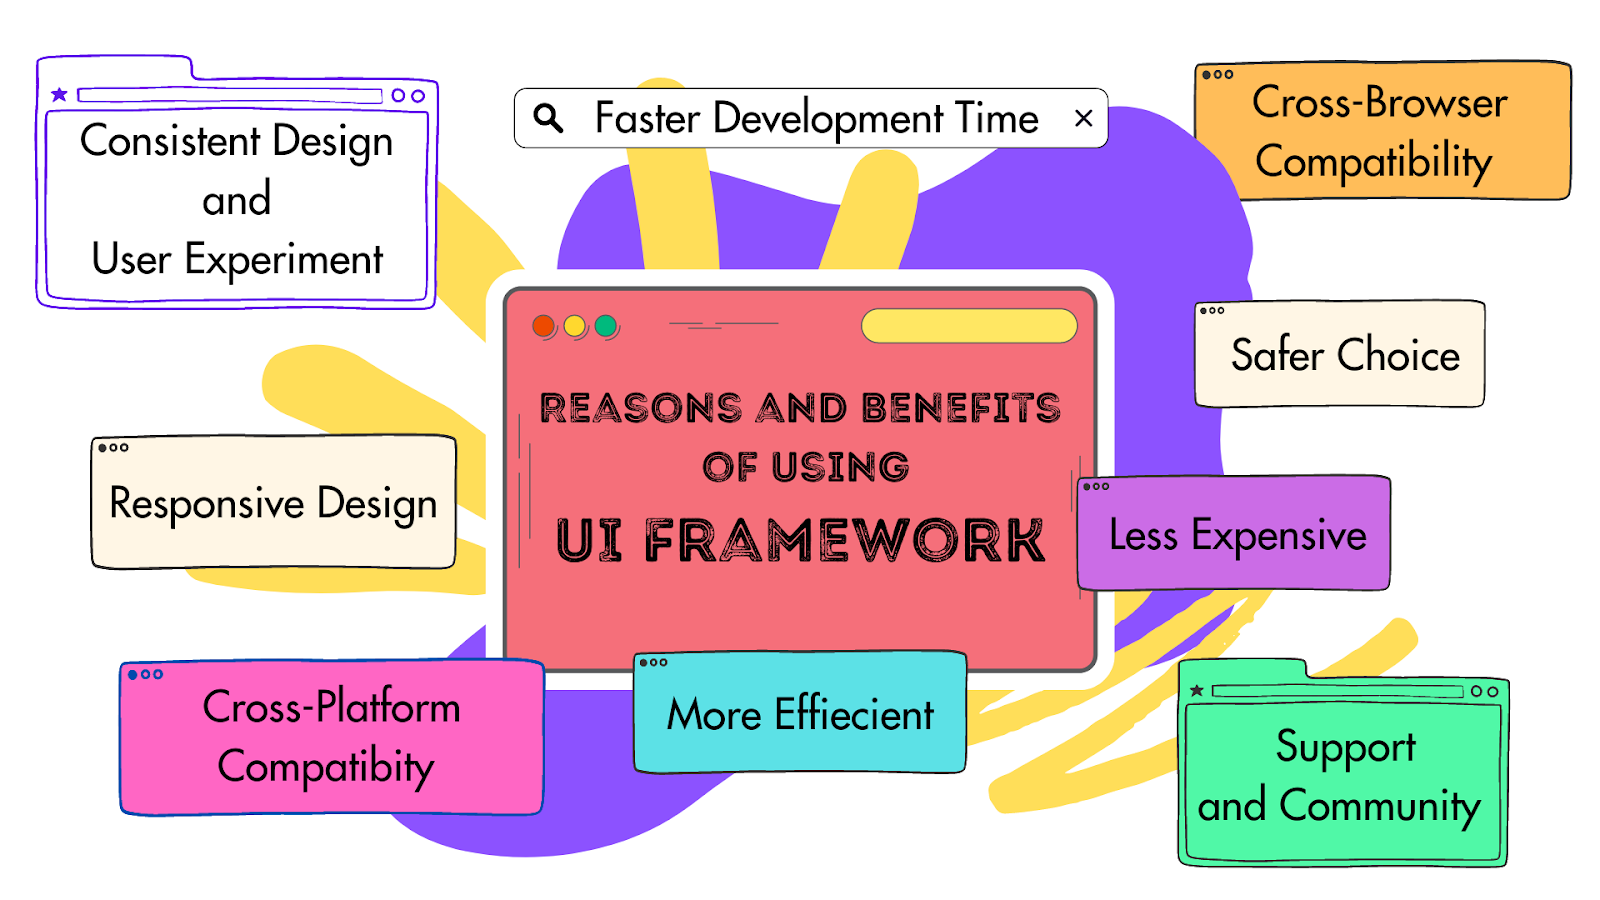 Reasons and Benefits of Using UI Framework